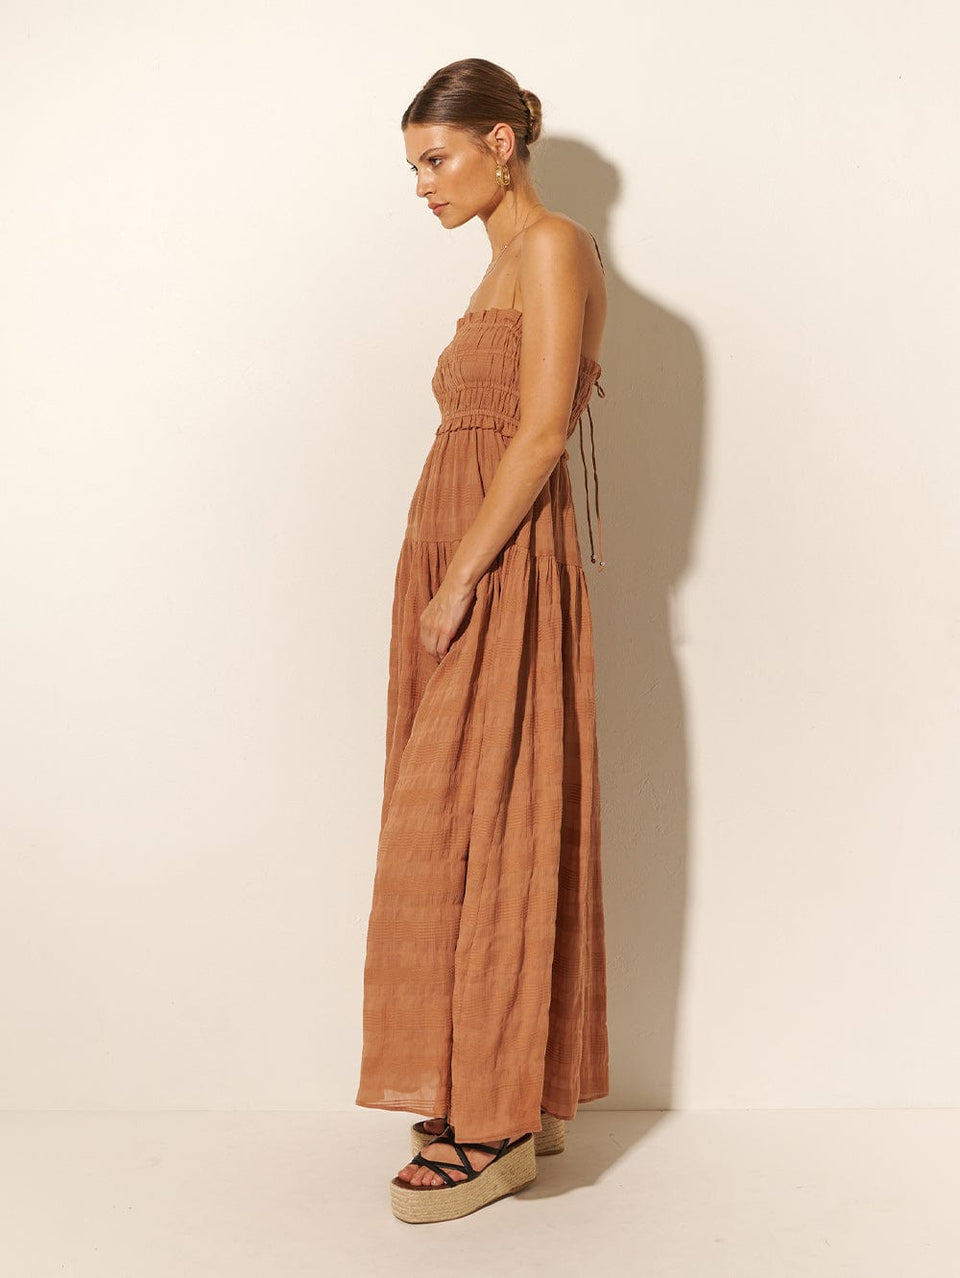 KIVARI Rylan Maxi Dress | Model wears Brown Maxi Dress Side View